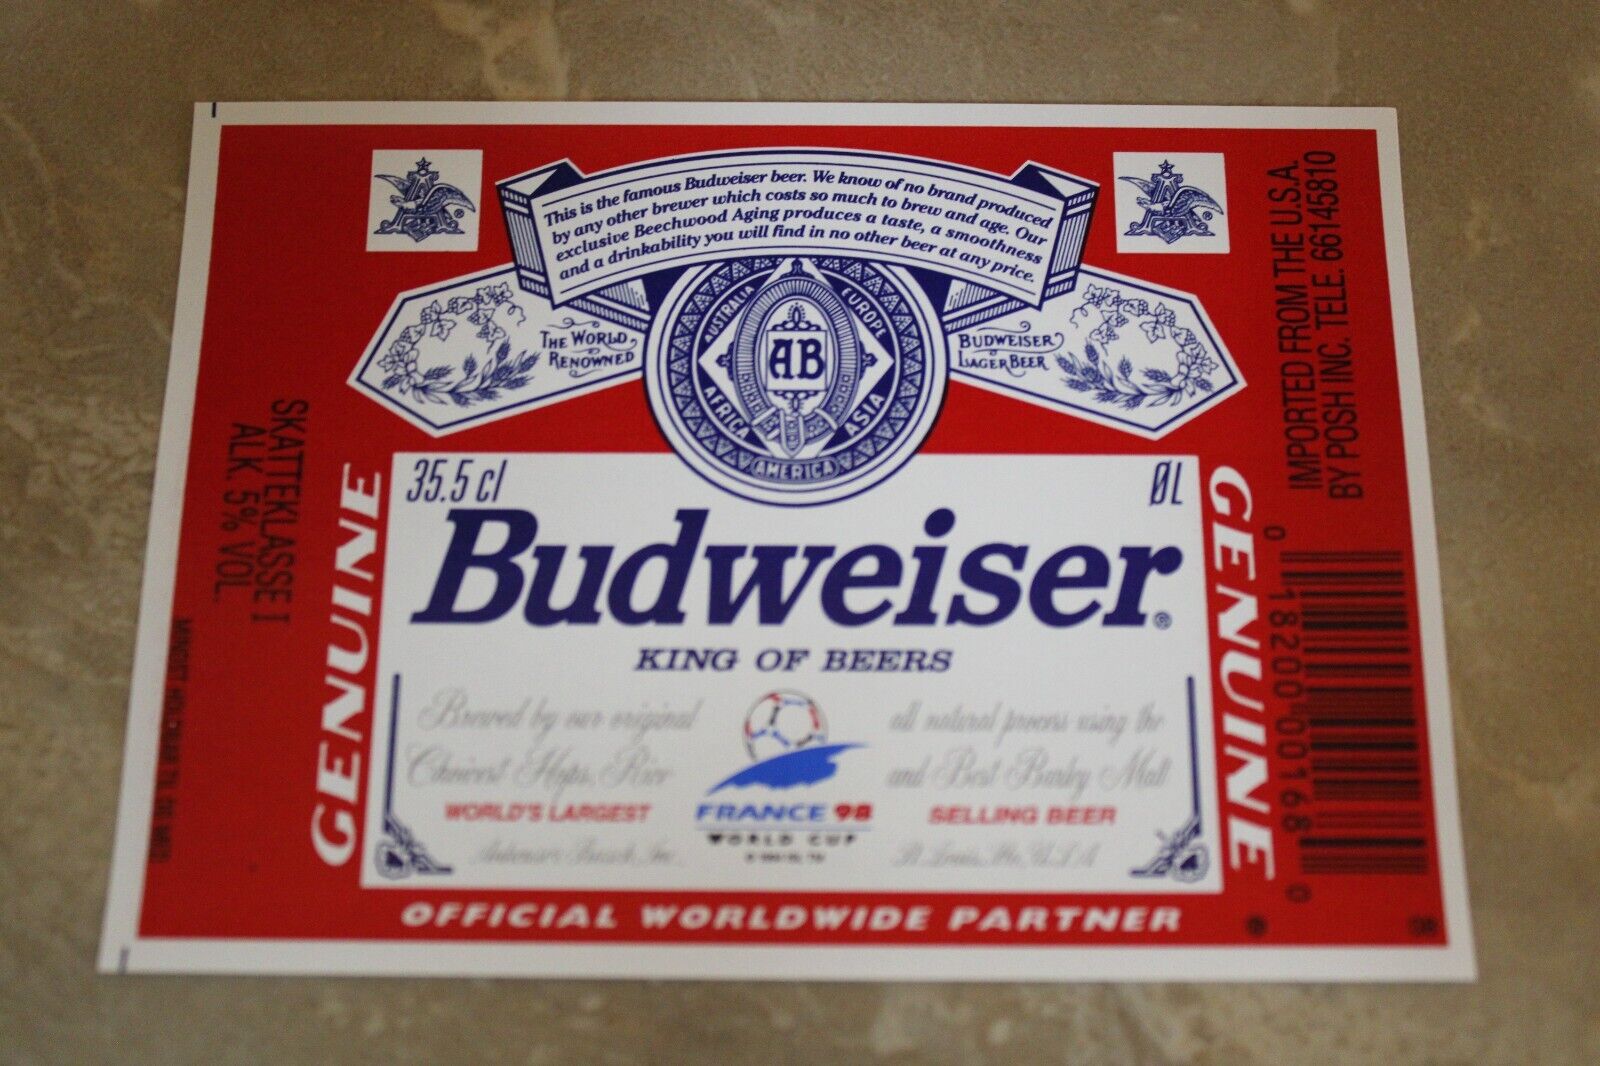 1998 Anheuser Busch Budweiser Soccer World Cup Beer Label France